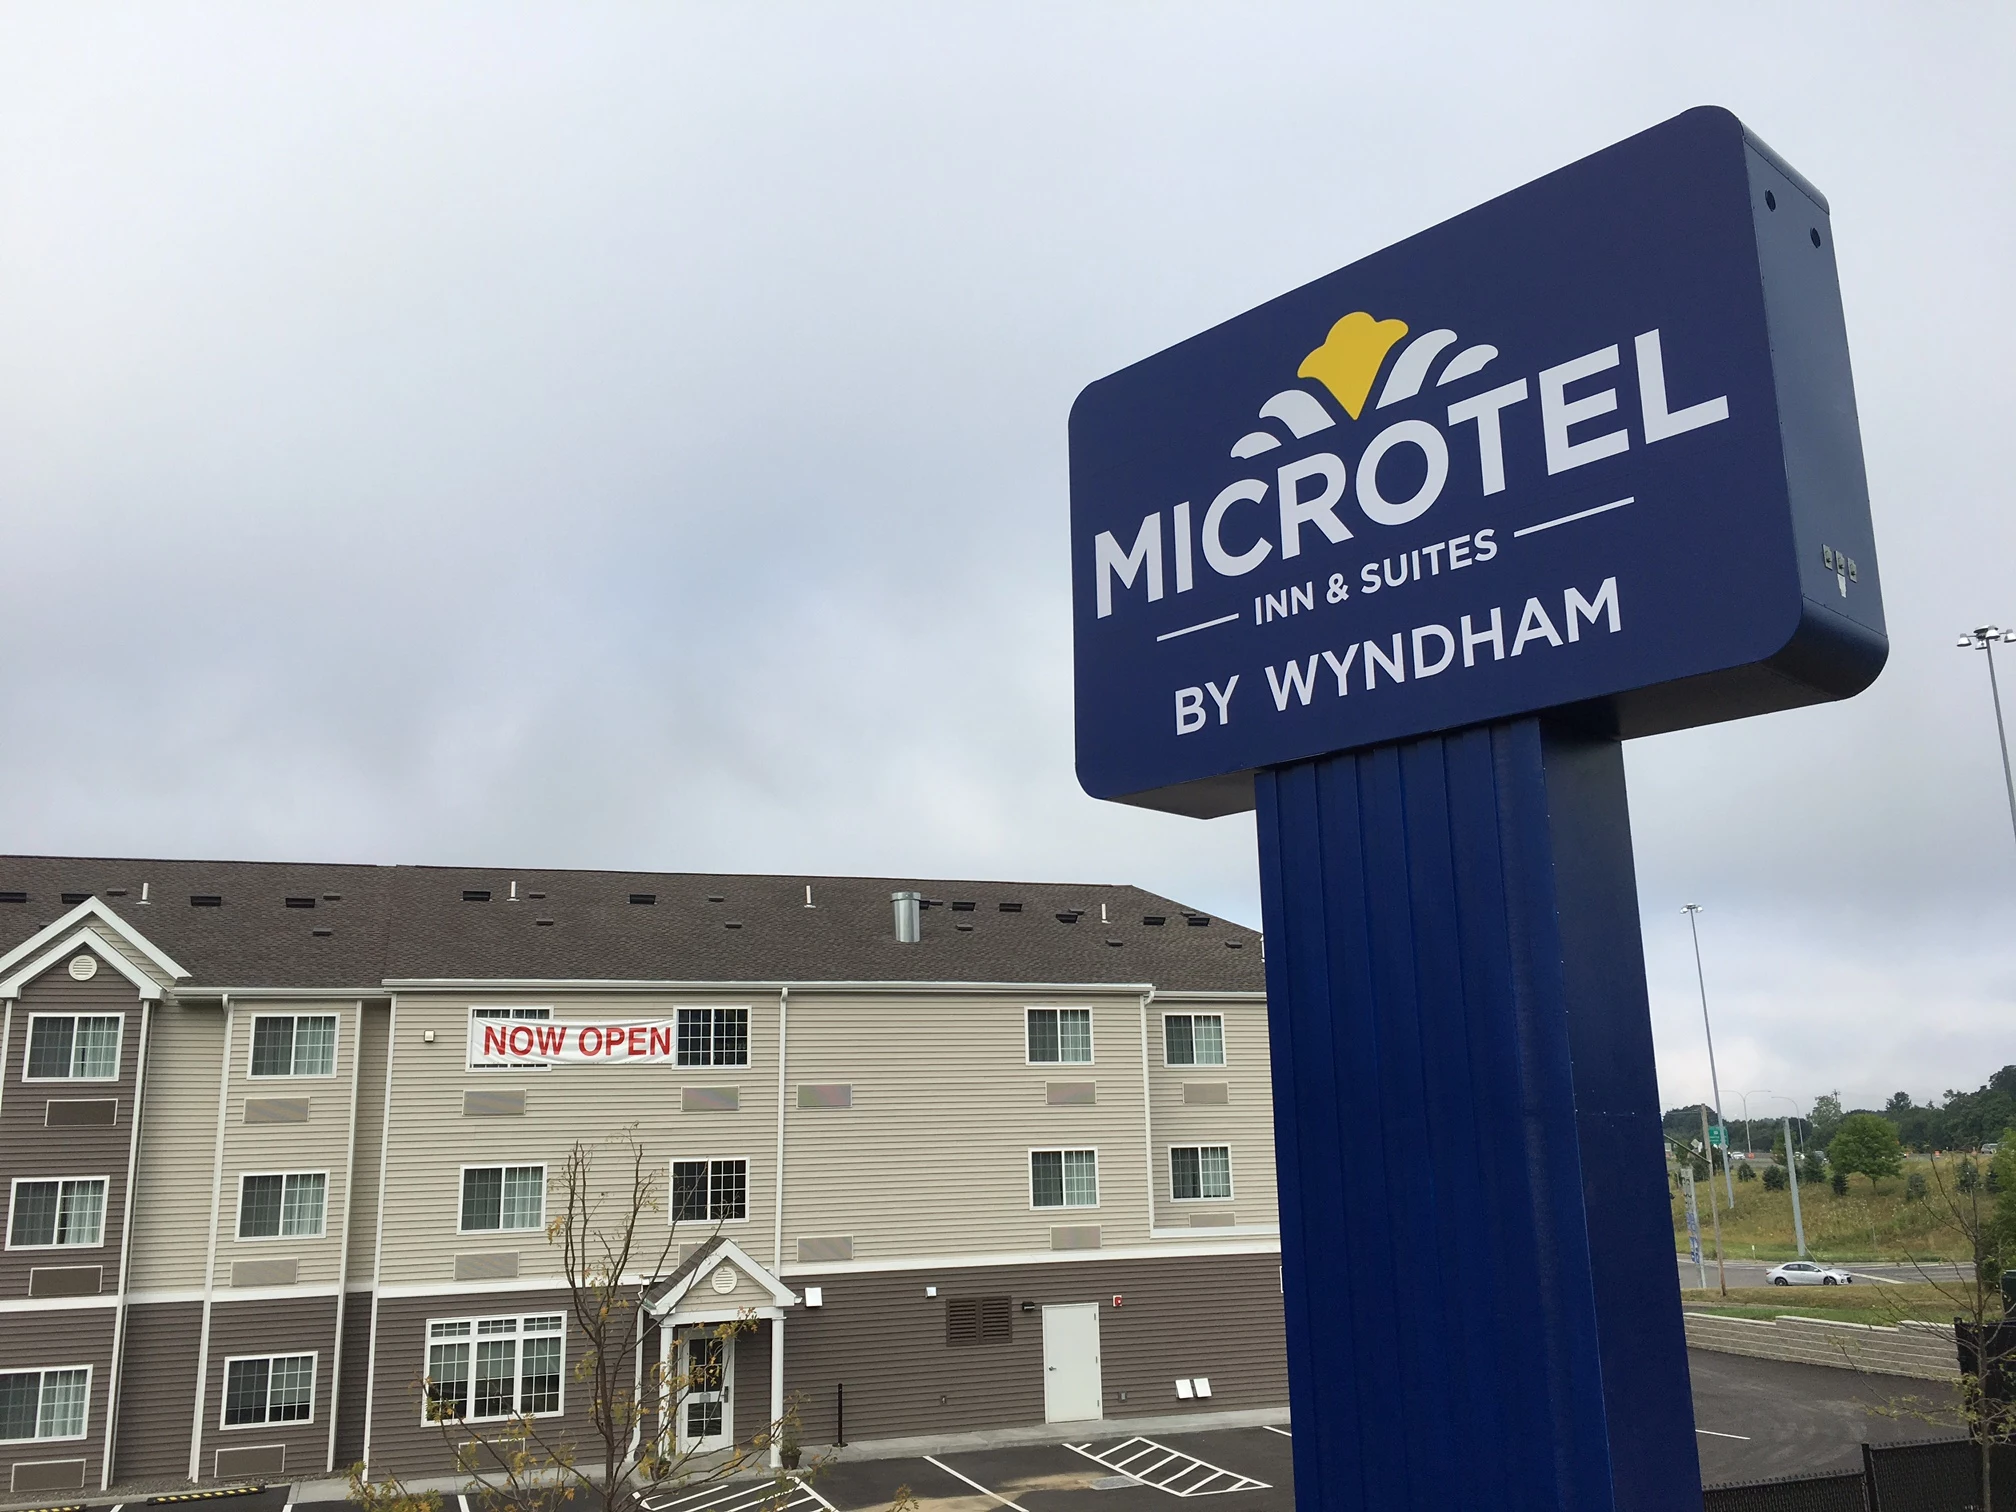 microtel inn & suites by wyndham salt lake city airport salt lake city ut